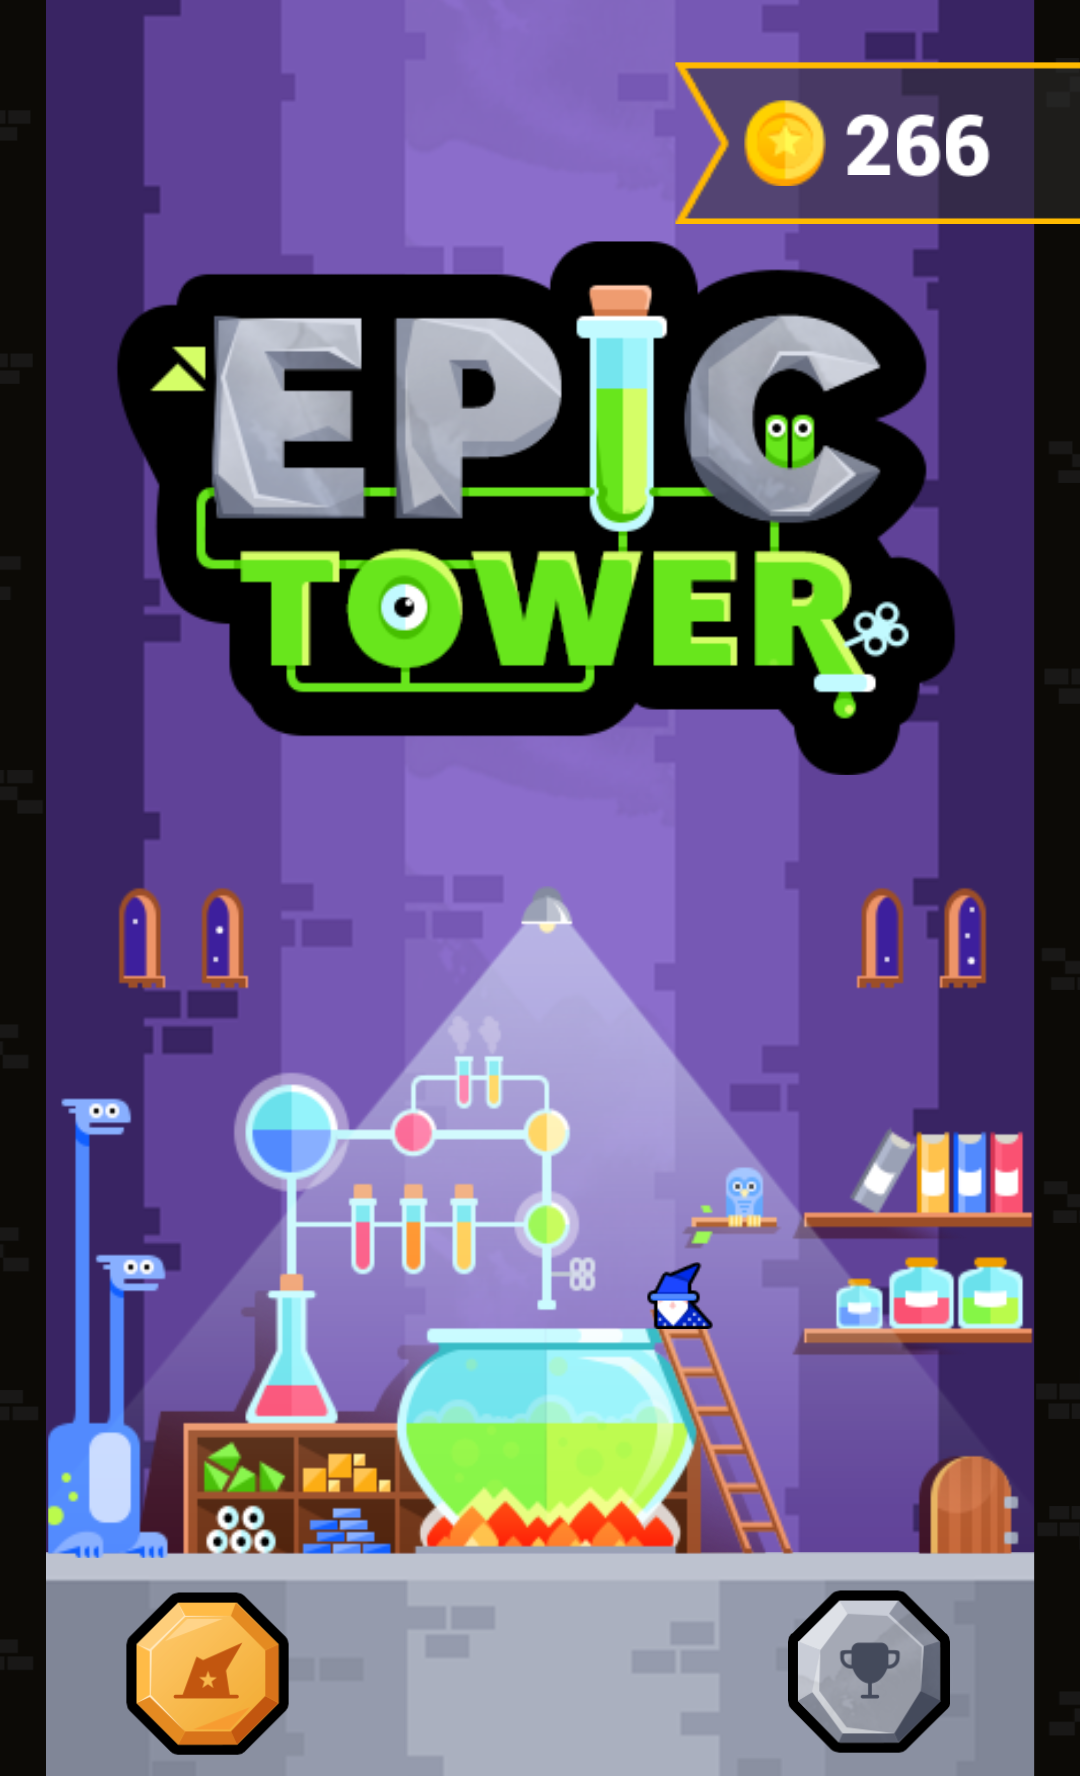 Screenshot 1 of Torre epica 1.0.3